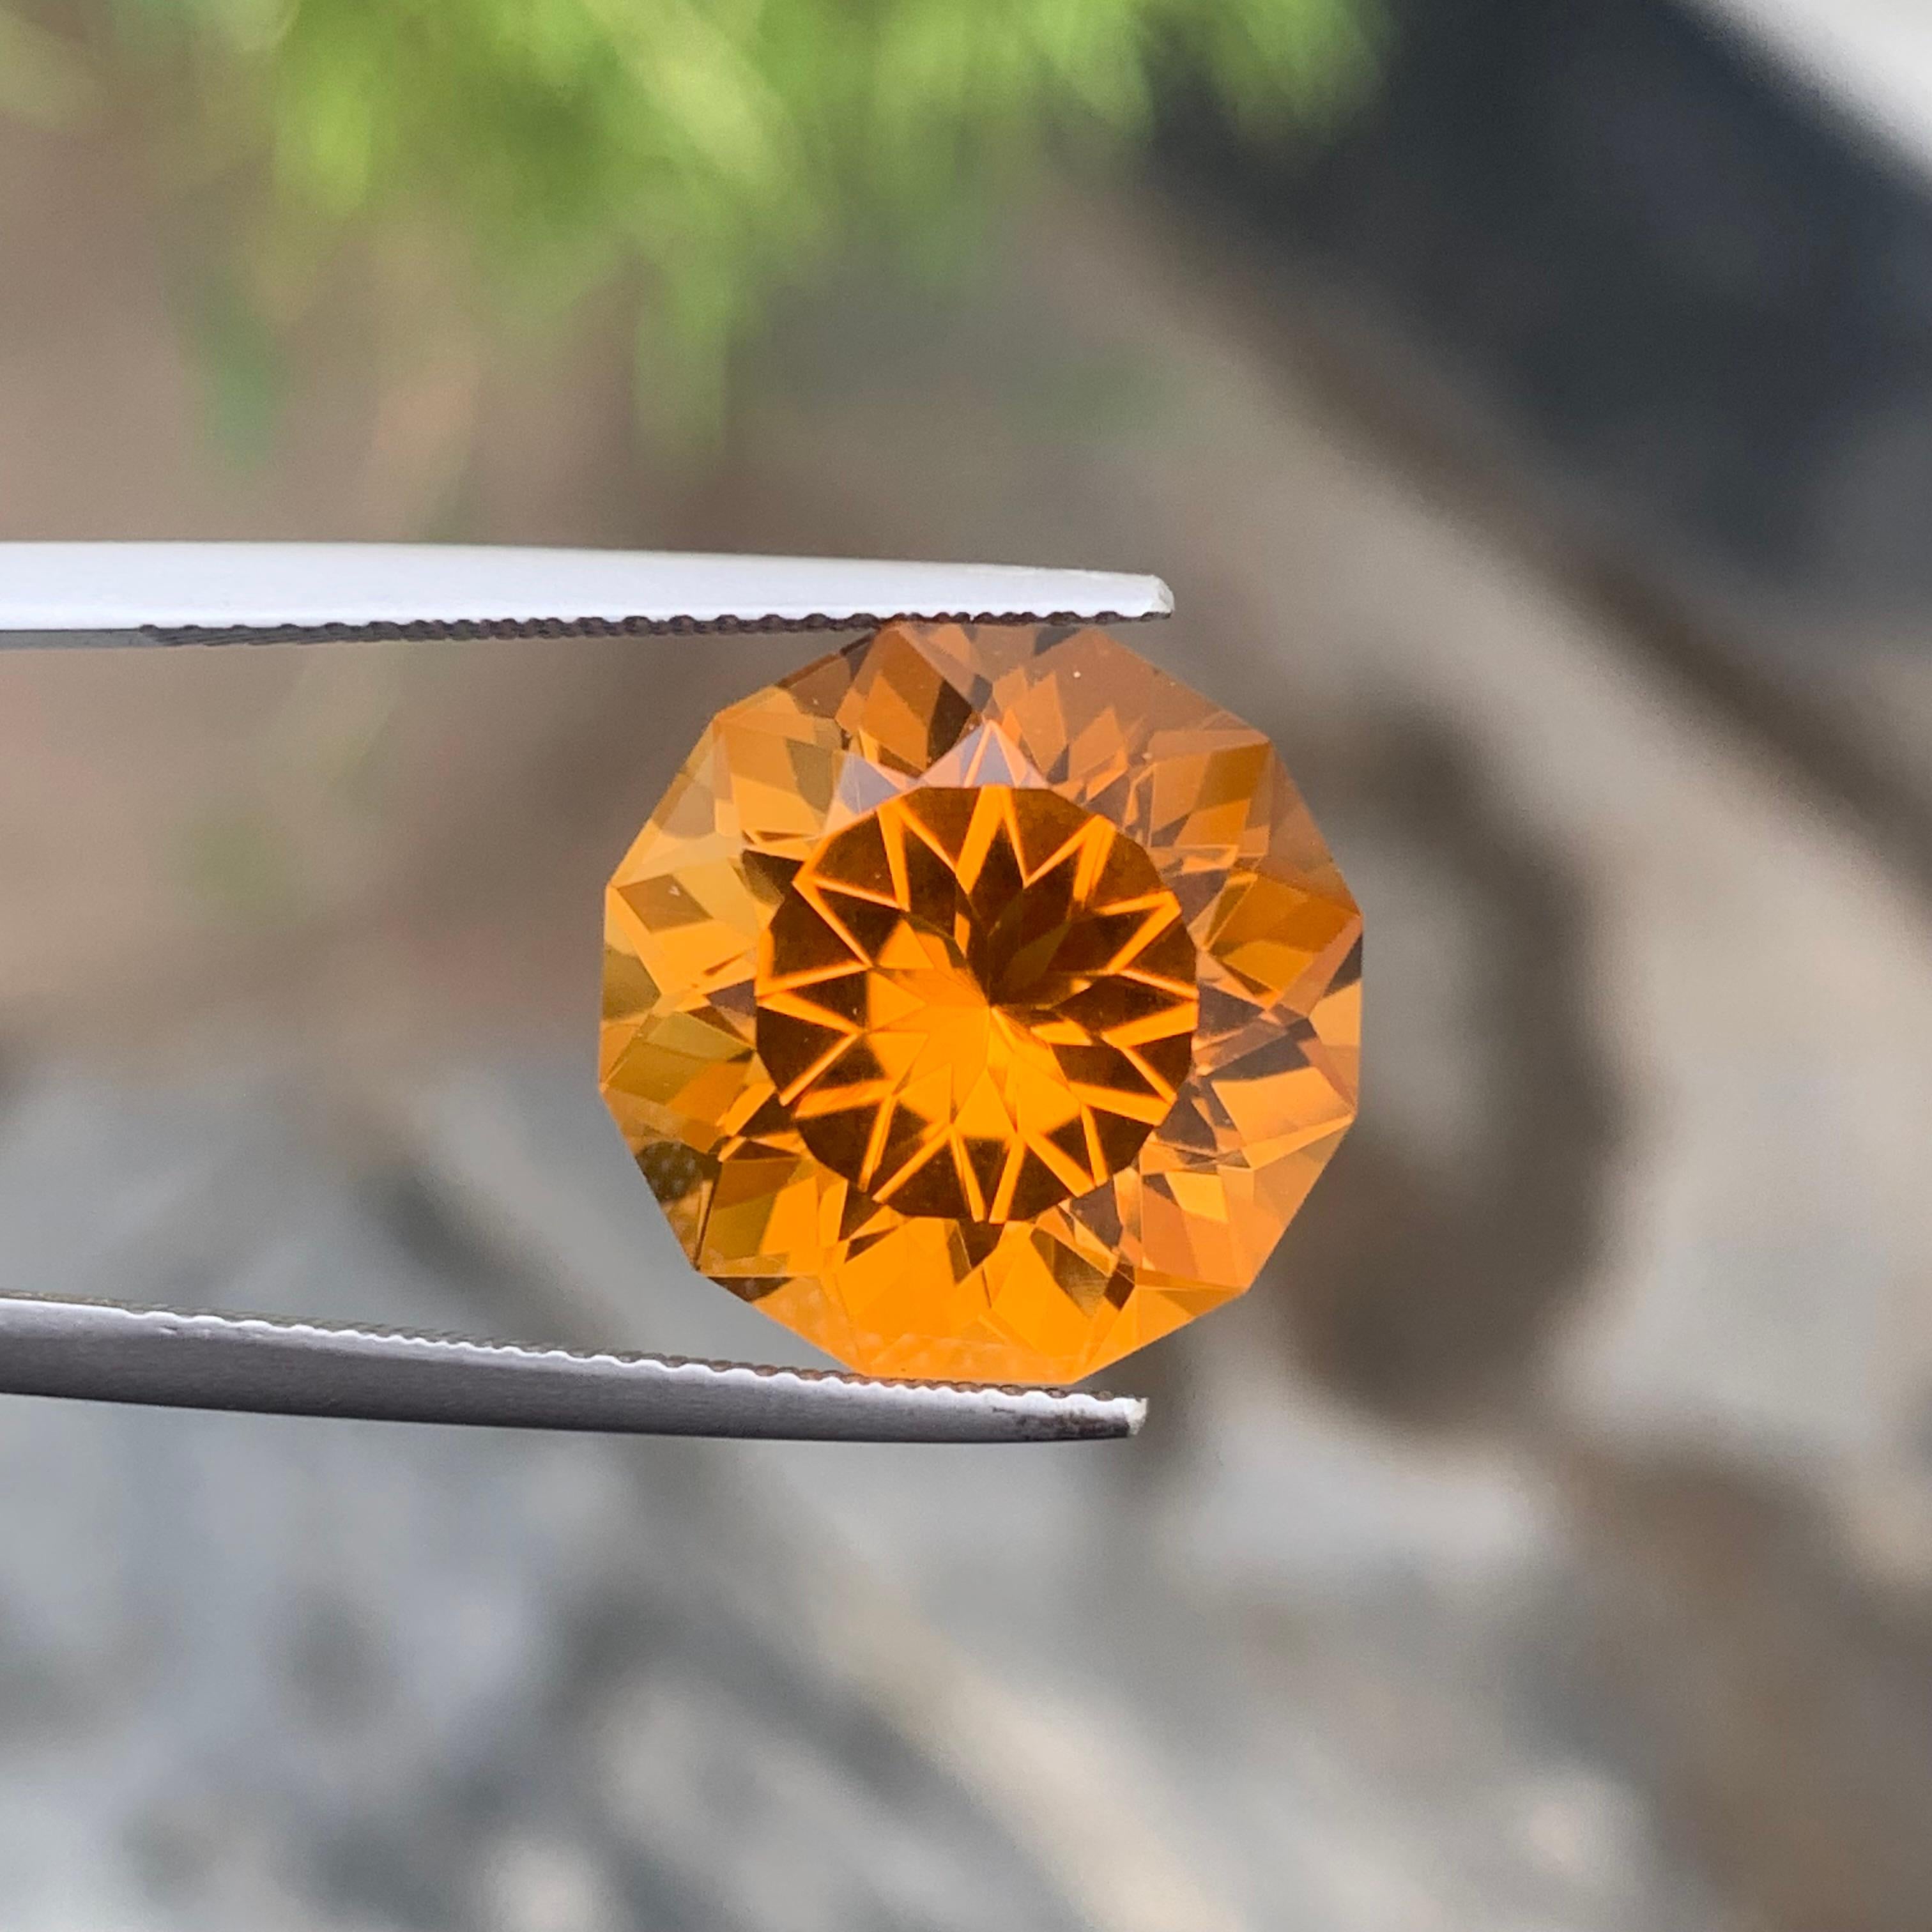 Round Cut Sparkling Genuine 10.55 Carat Flower Cut Loose Madeira Citrine Gemstone For Sale